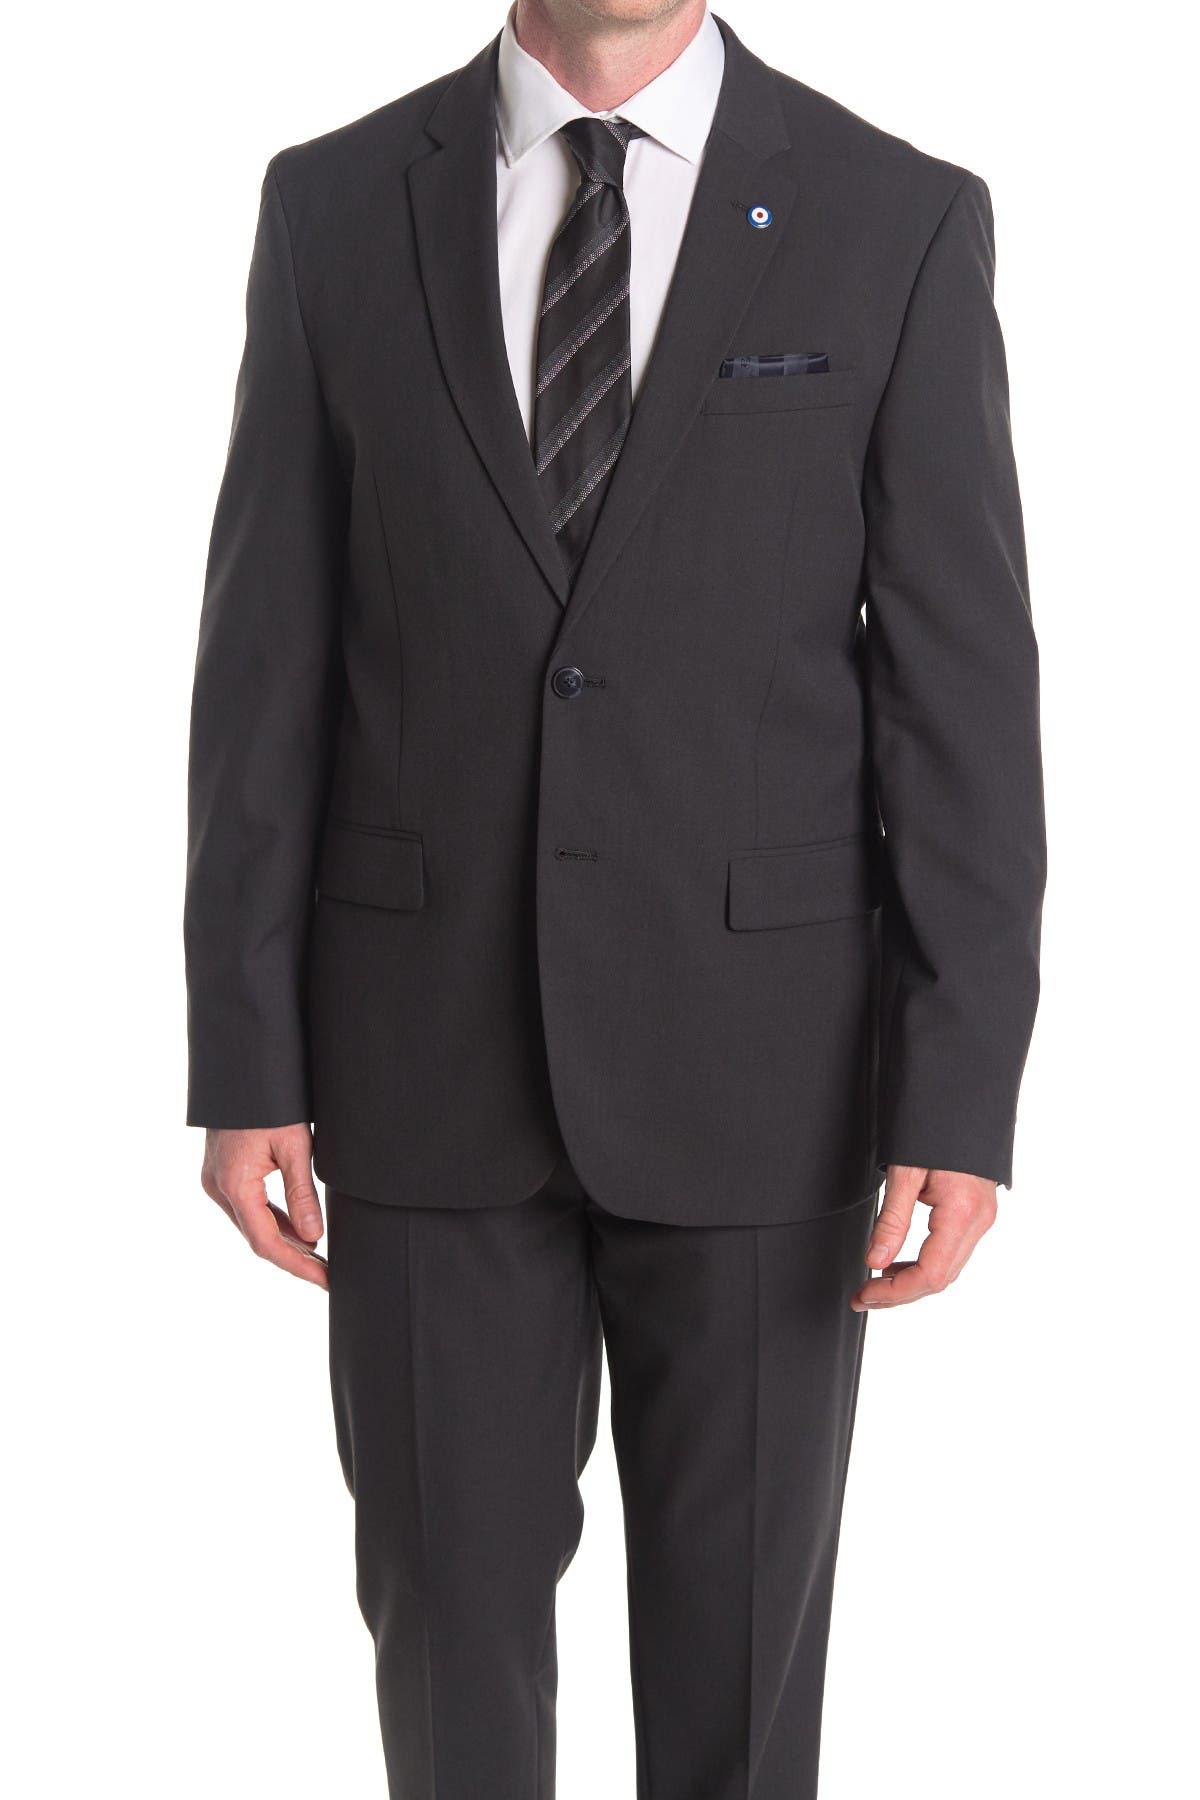 Ben Sherman Burge Dark Gray Two Button Notch Lapel Suit Separate Jacket